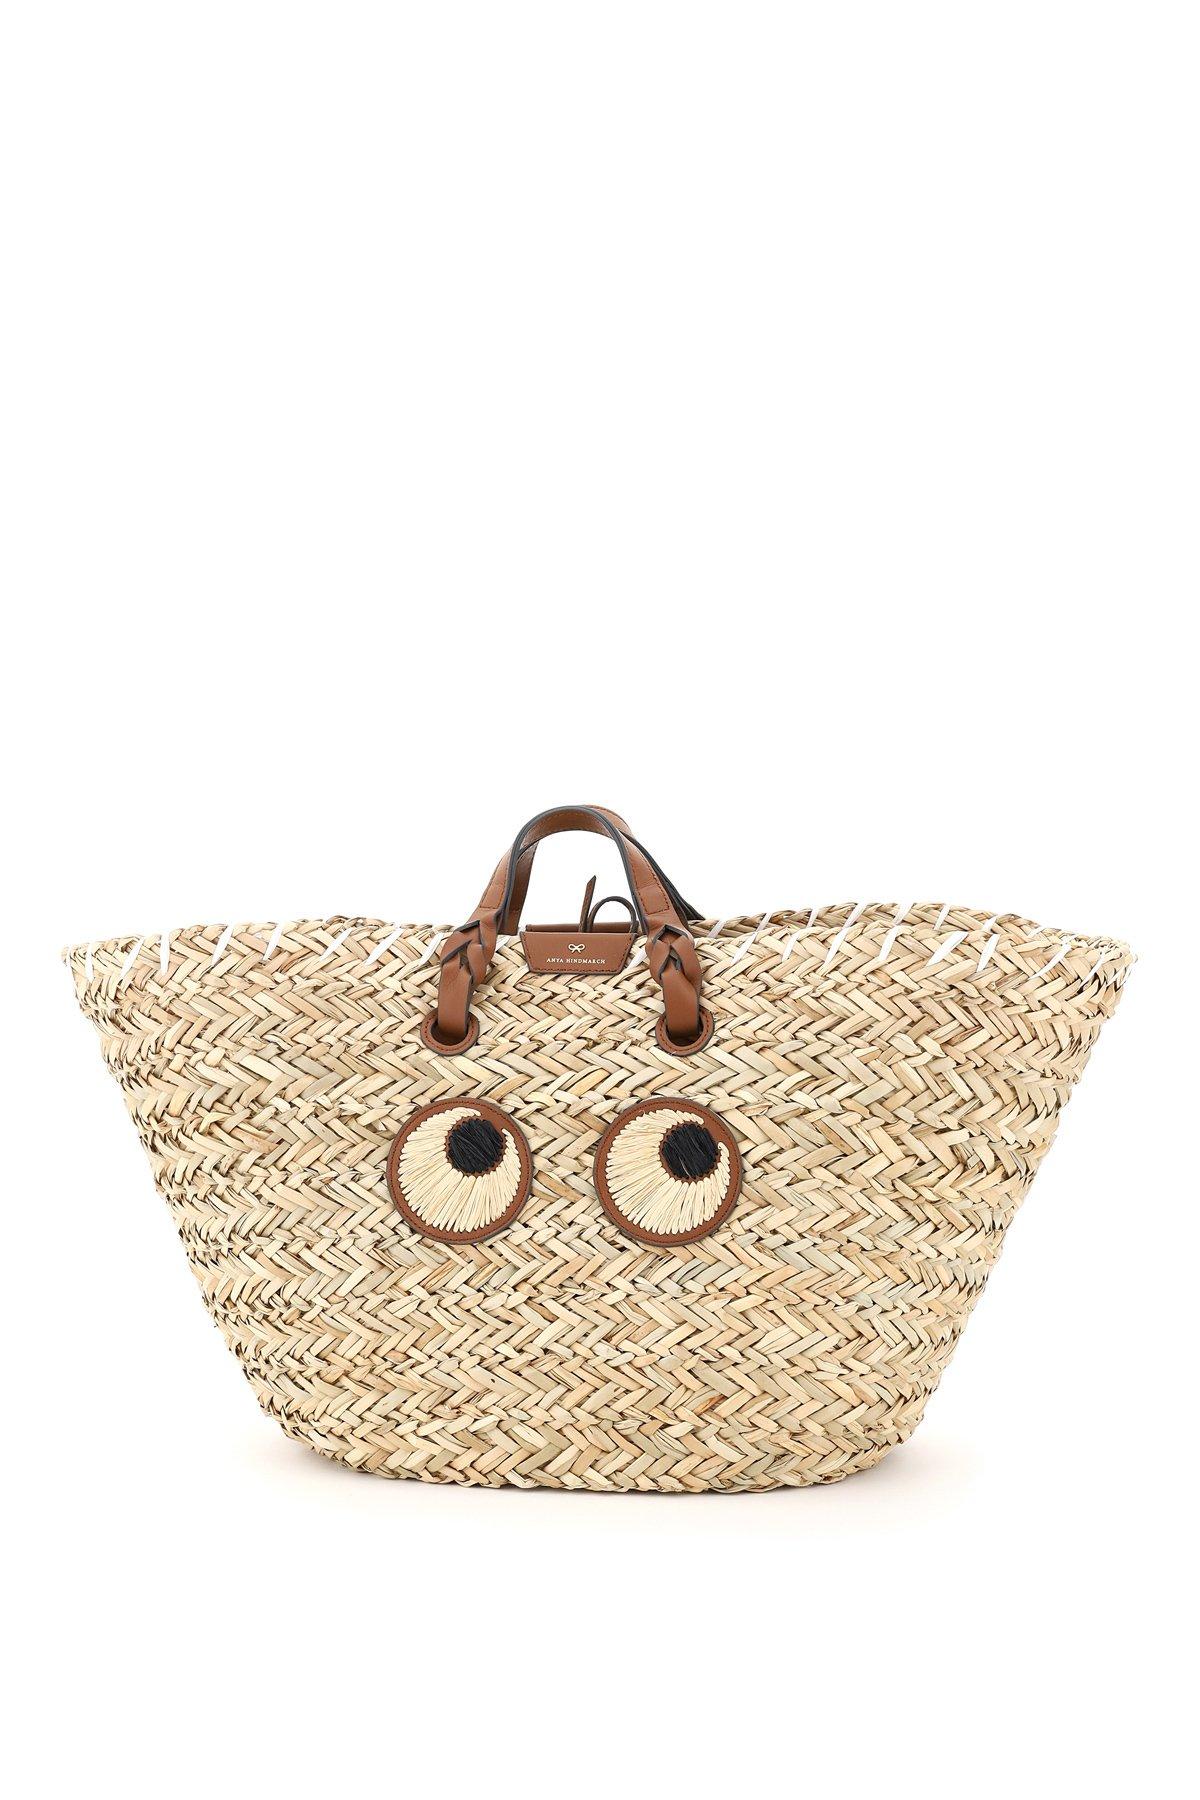 Anya Hindmarch Paper Eyes Large Basket Bag in Natural | Lyst